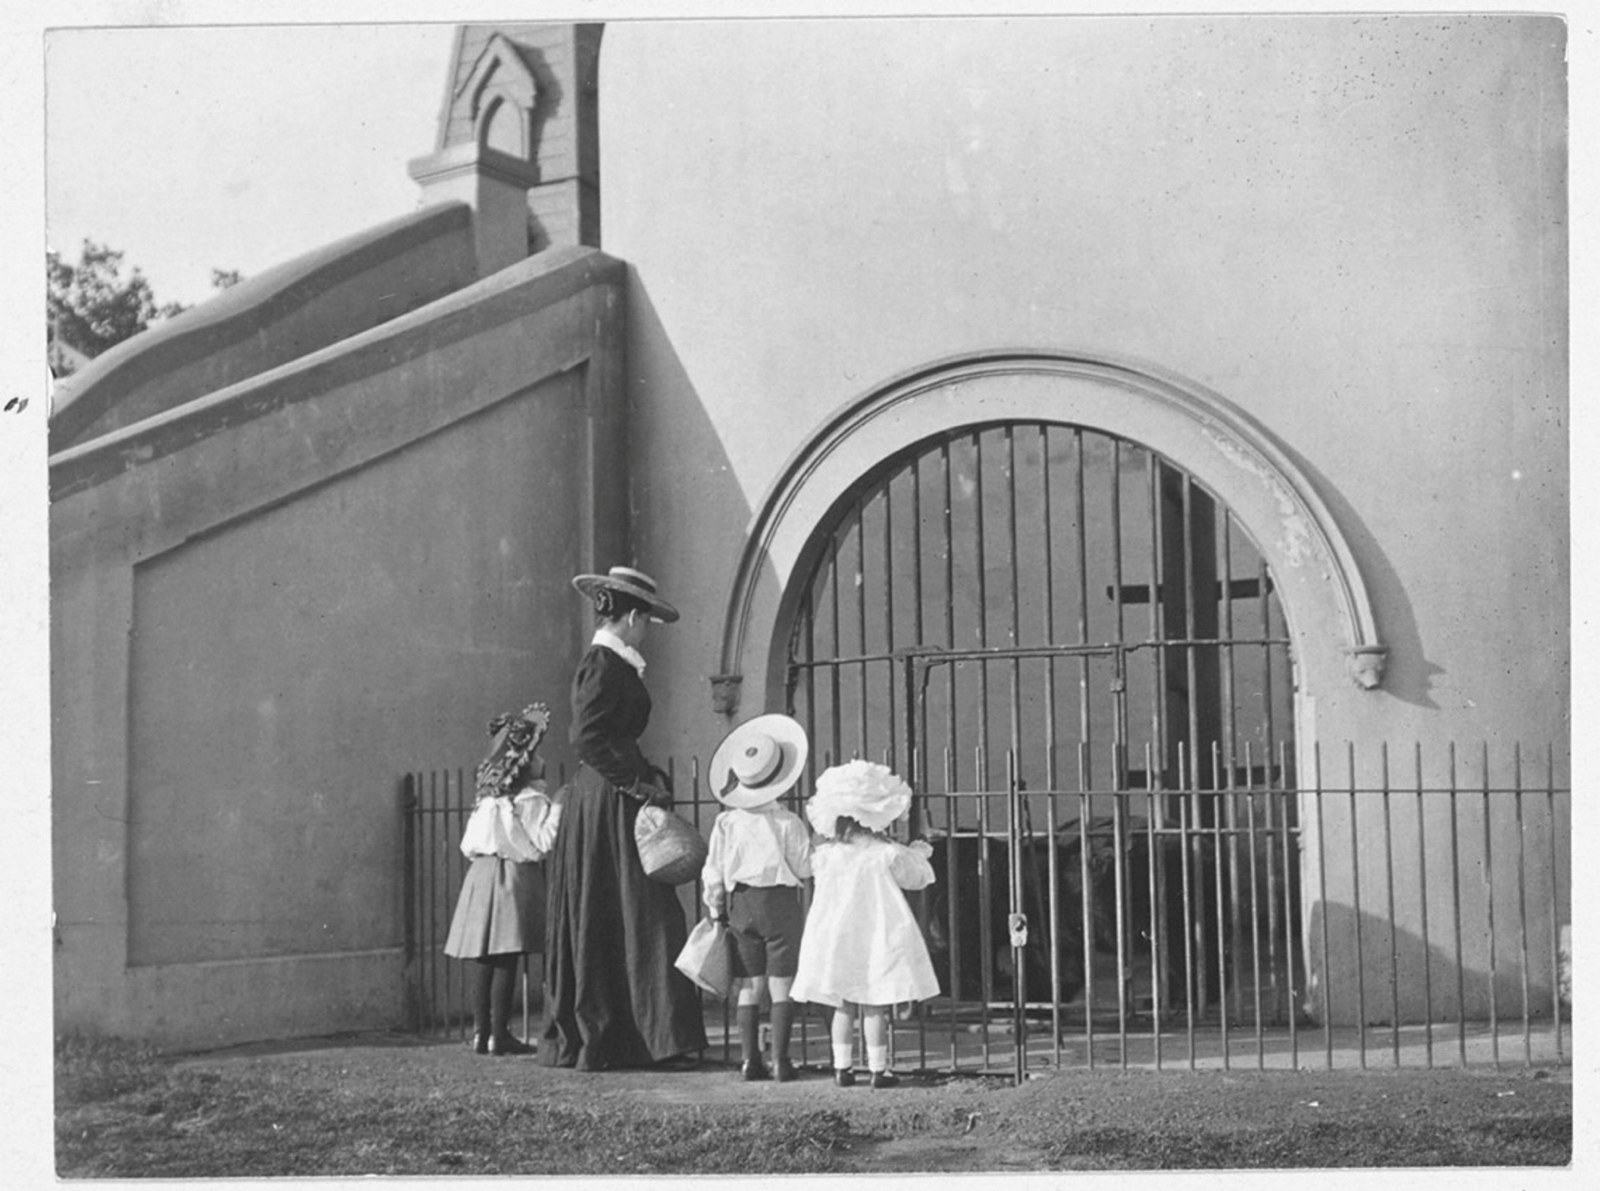 Children peering into a bear pit enclosure at Sydney Boys and Sydney Girls high schools.